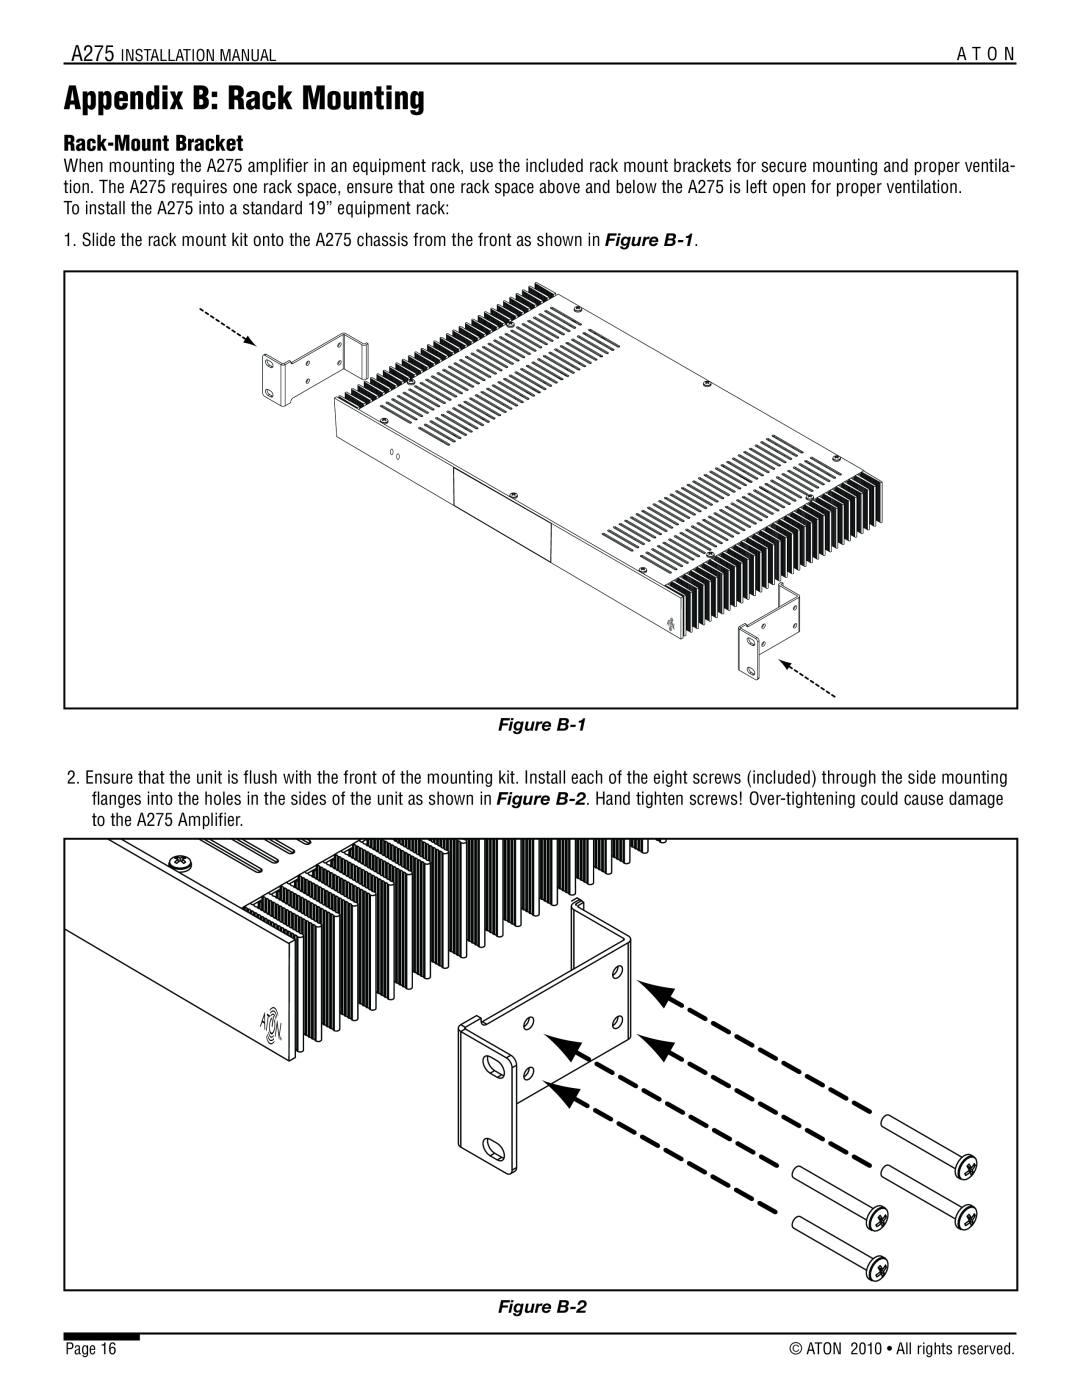 ATON A275 installation manual Appendix B: Rack Mounting, Rack-MountBracket, Figure B-1, Figure B-2 